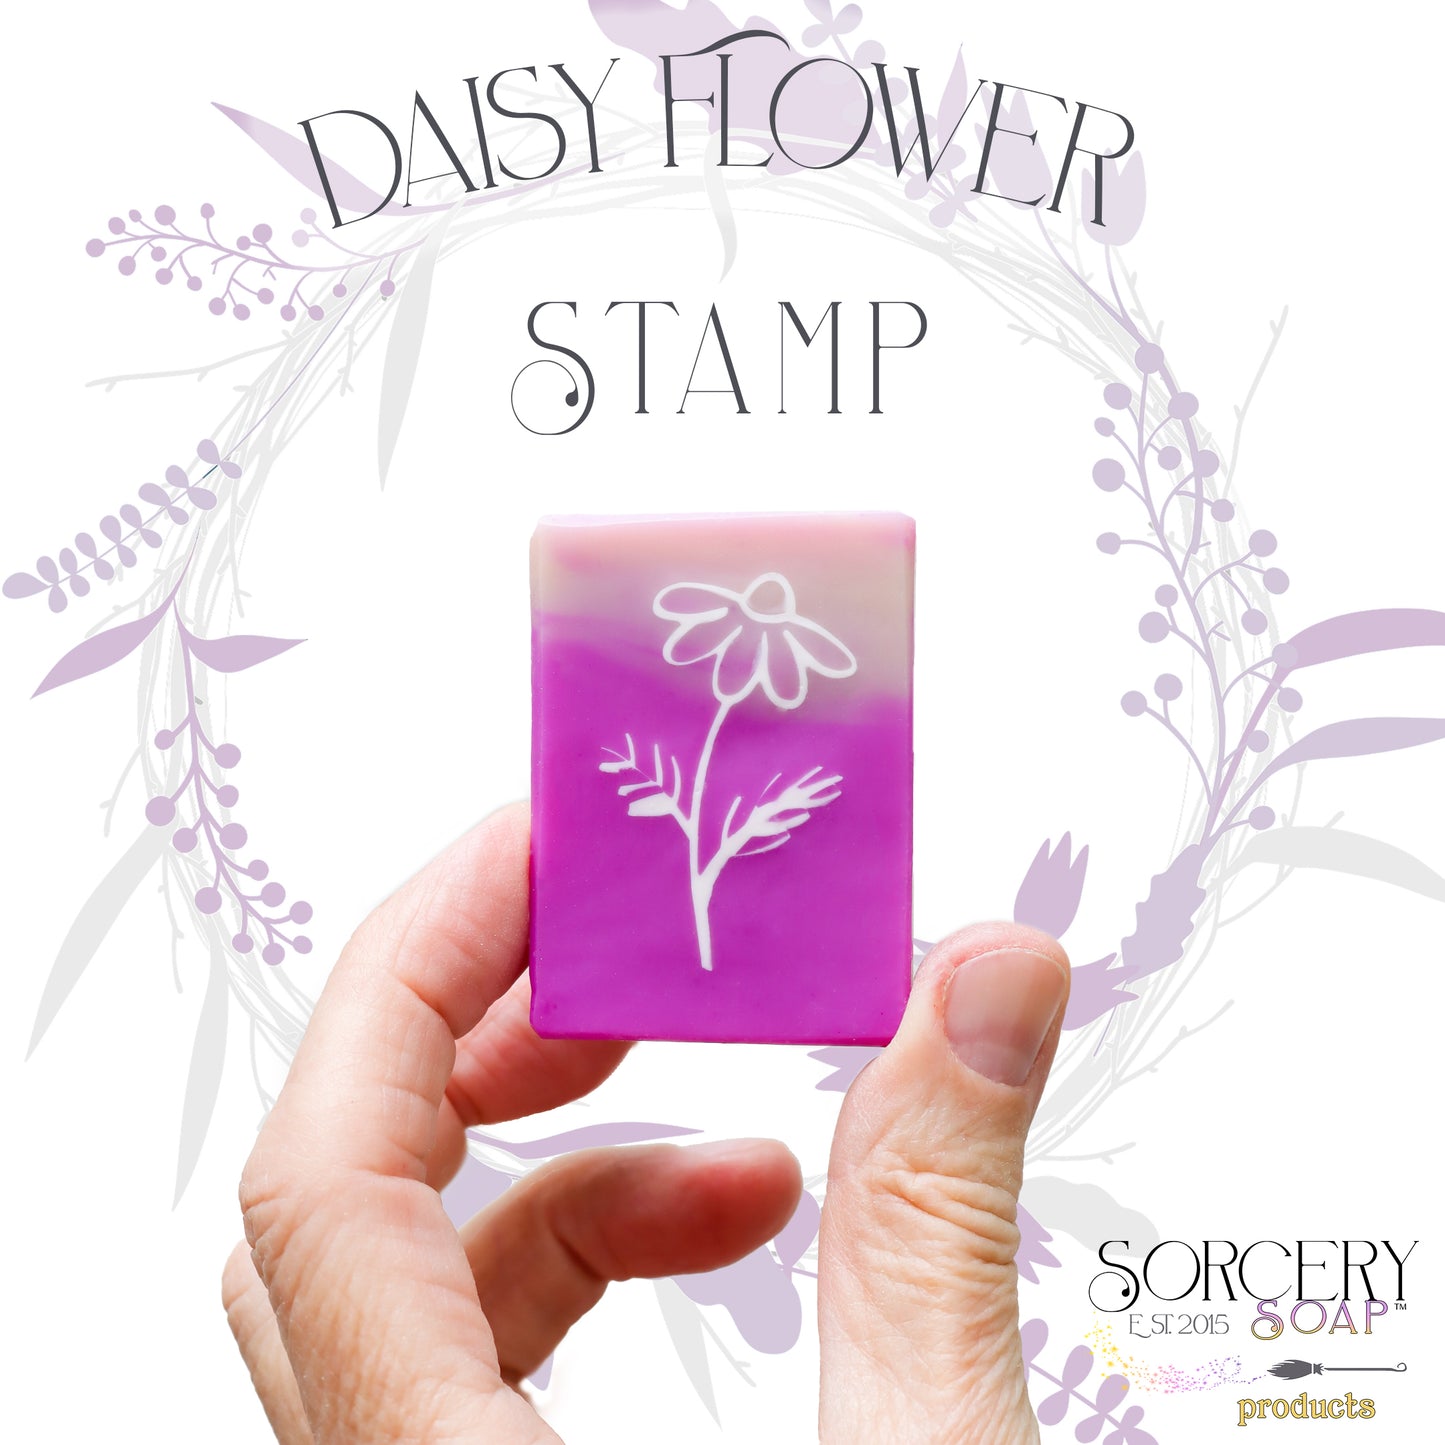 Flower Daisy Stamp